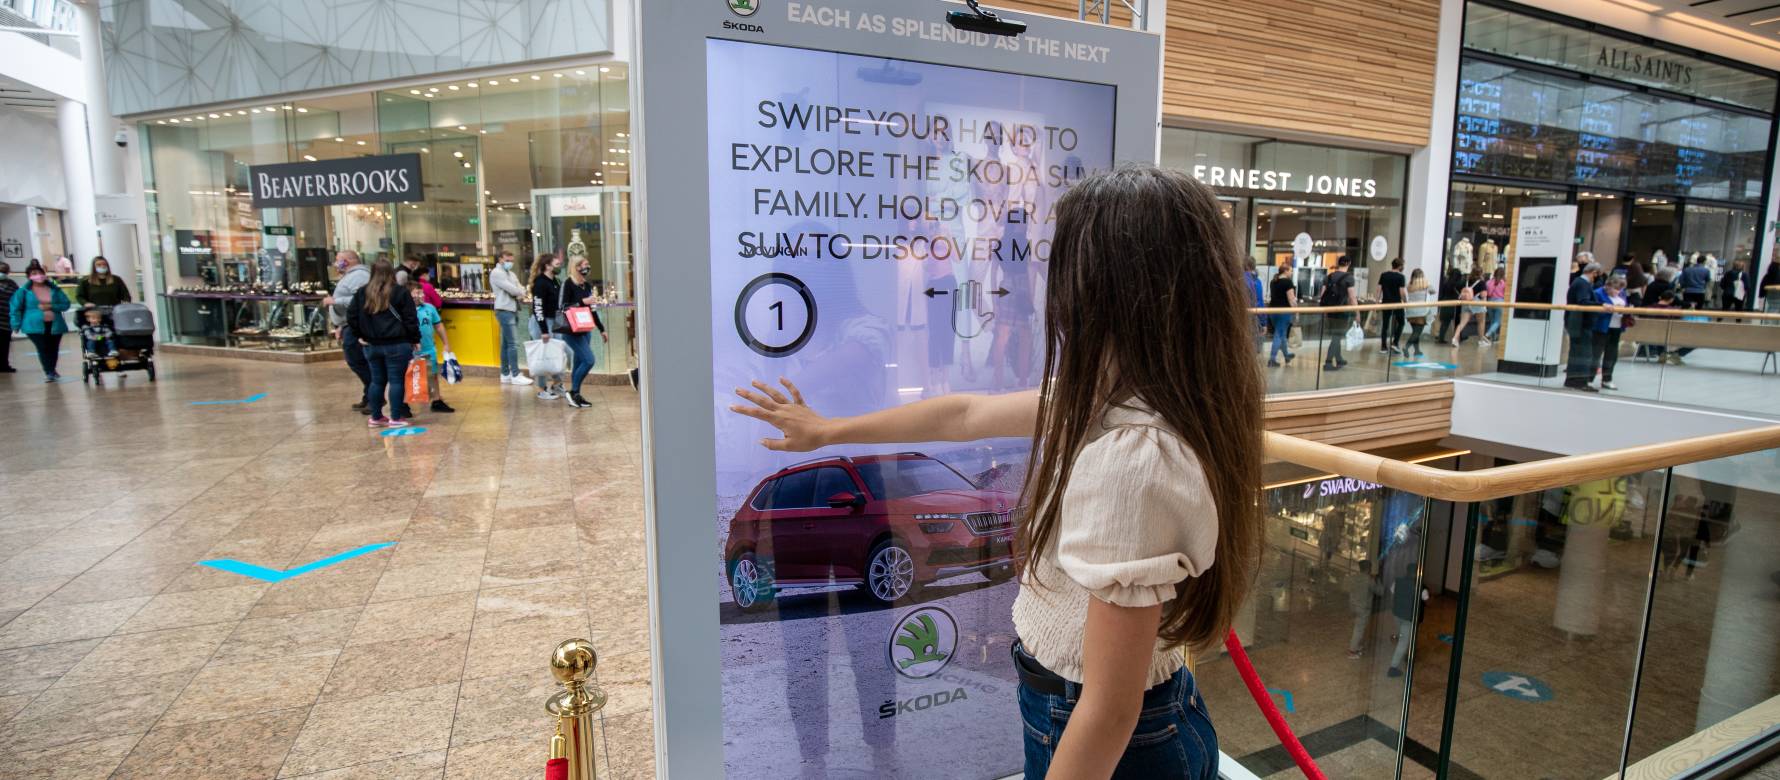 Digital screen in a shopping mall showing Skoda advert